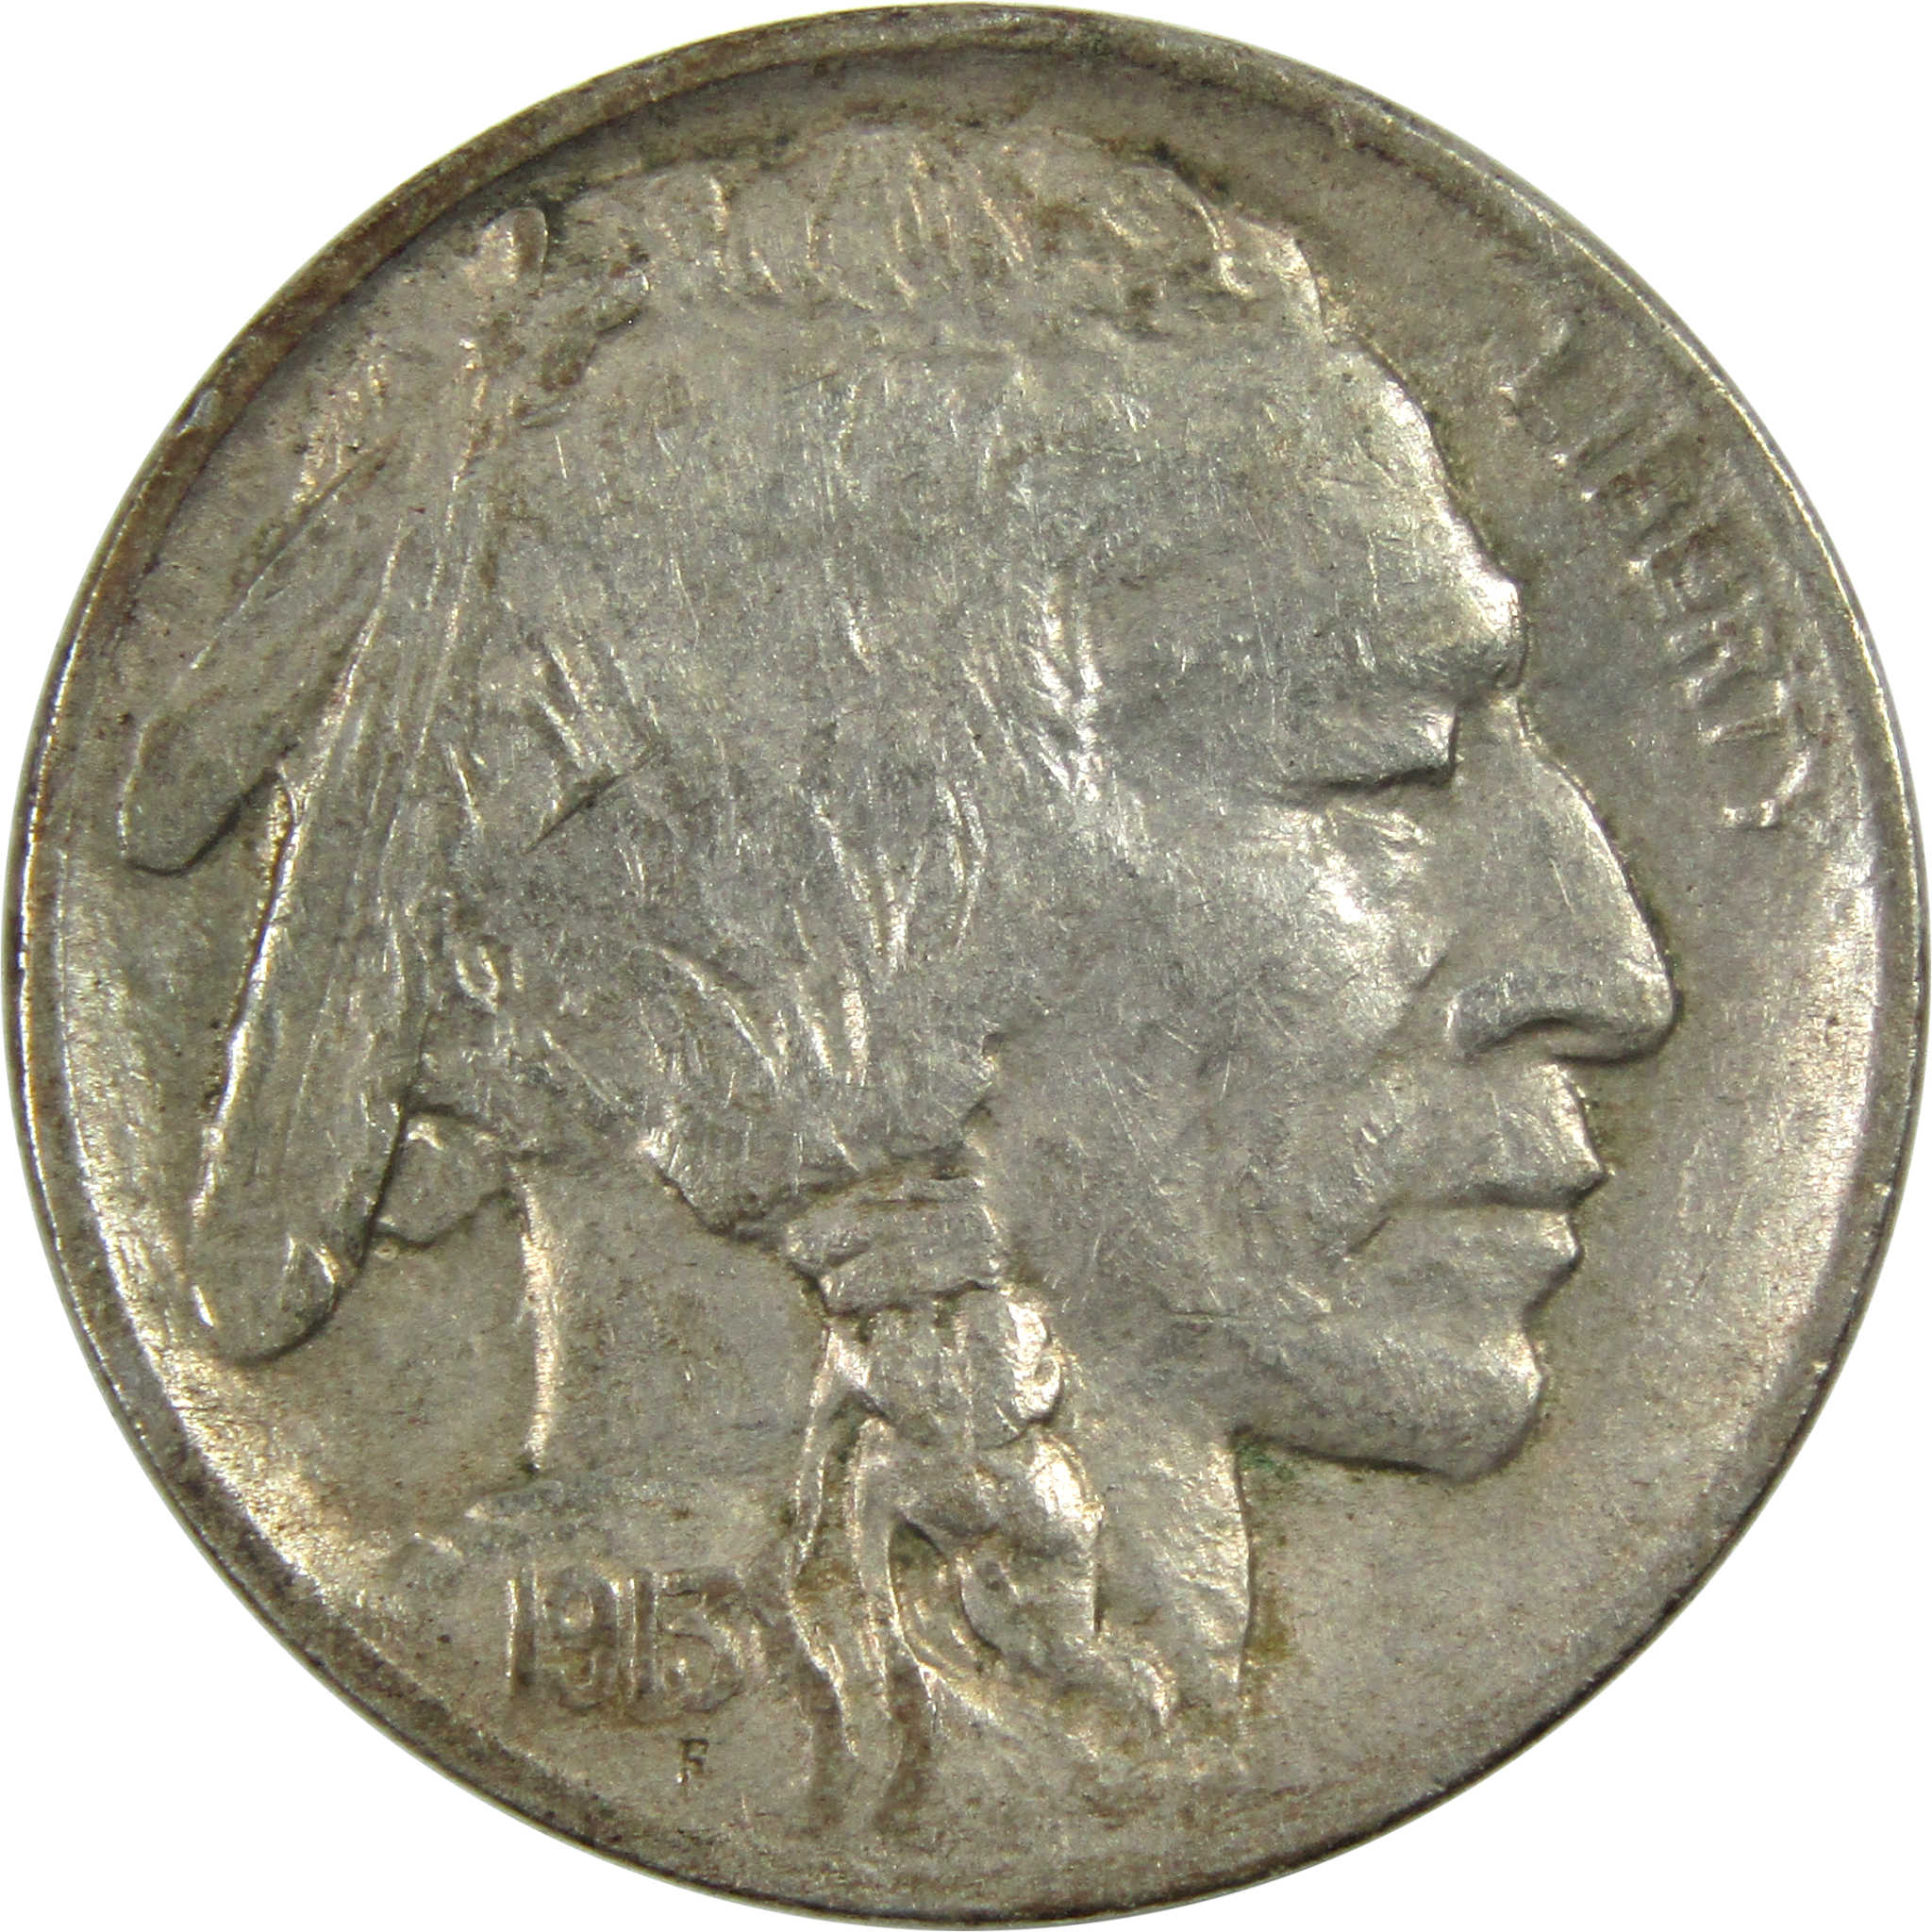 1913 Type 1 Indian Head Buffalo Nickel VF Very Fine 5c Coin SKU:I12998